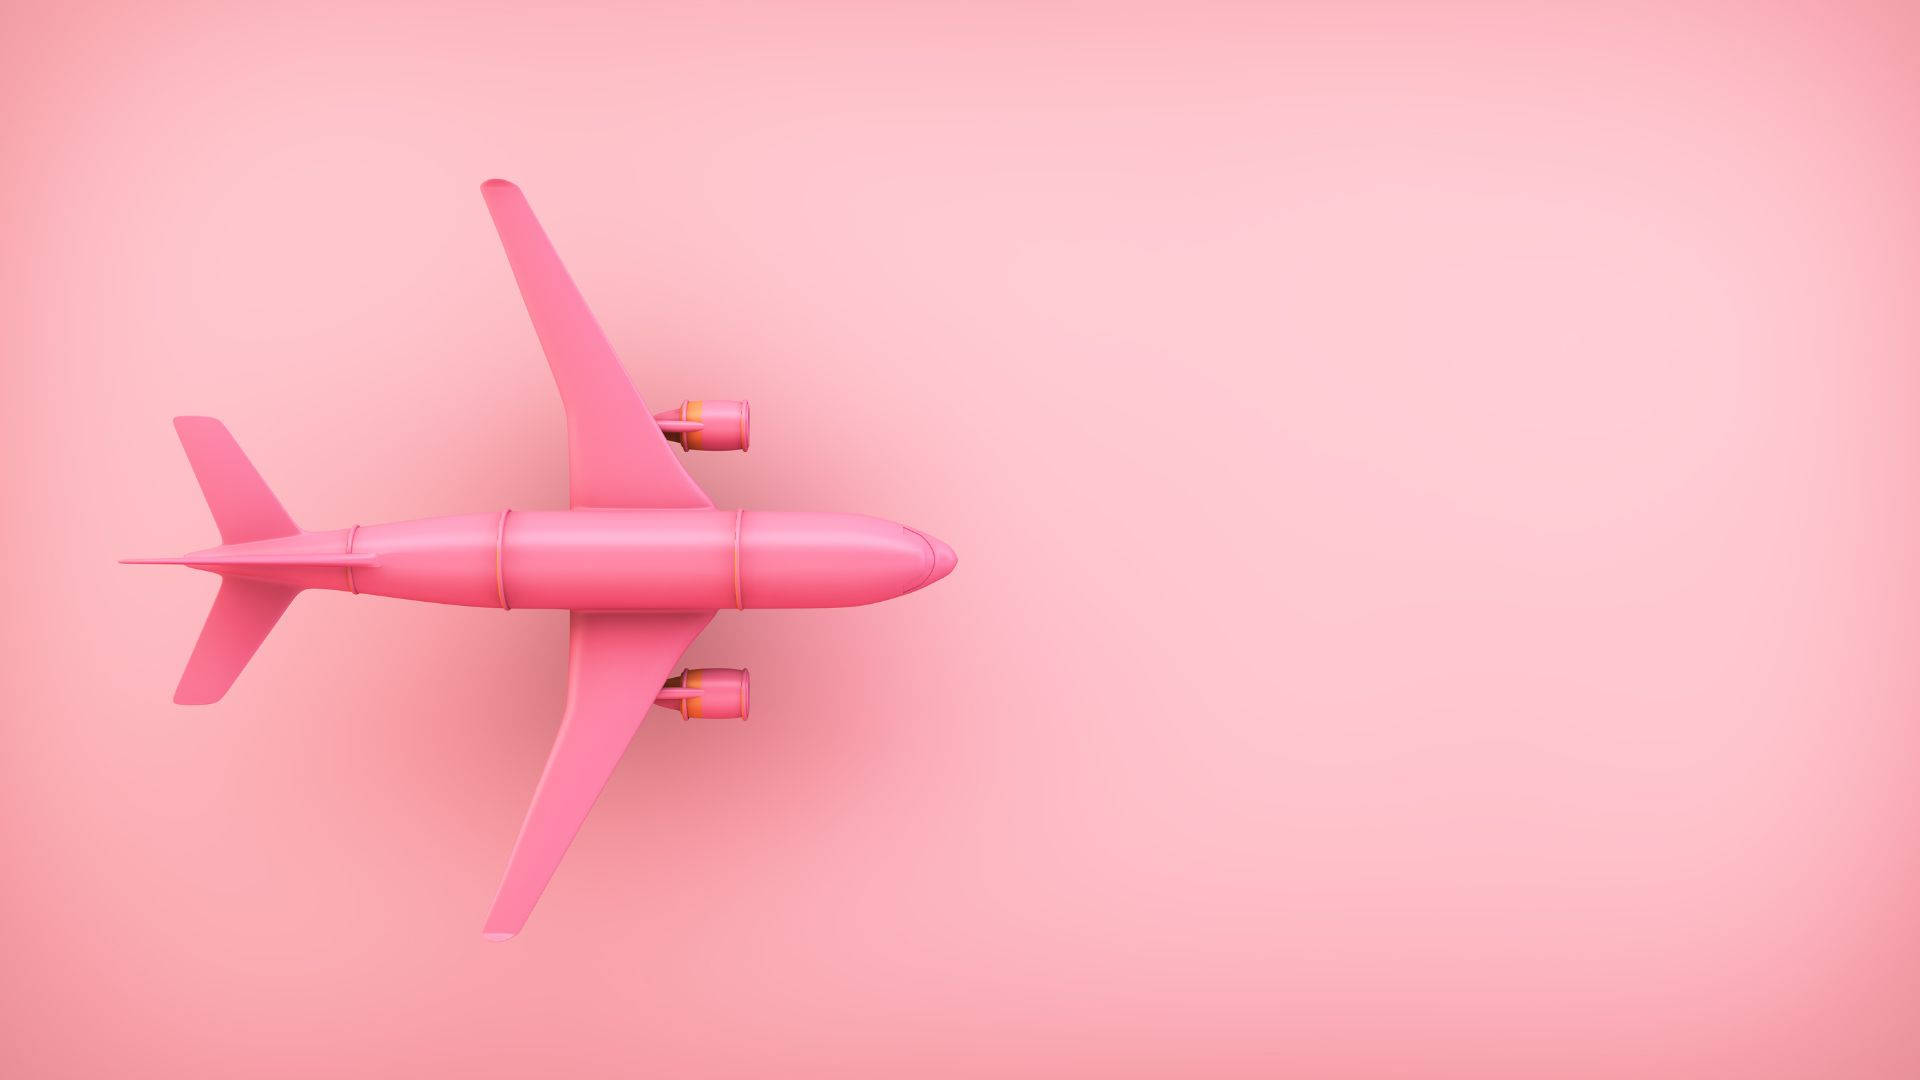 Rosaflugzeugspielzeug. Wallpaper